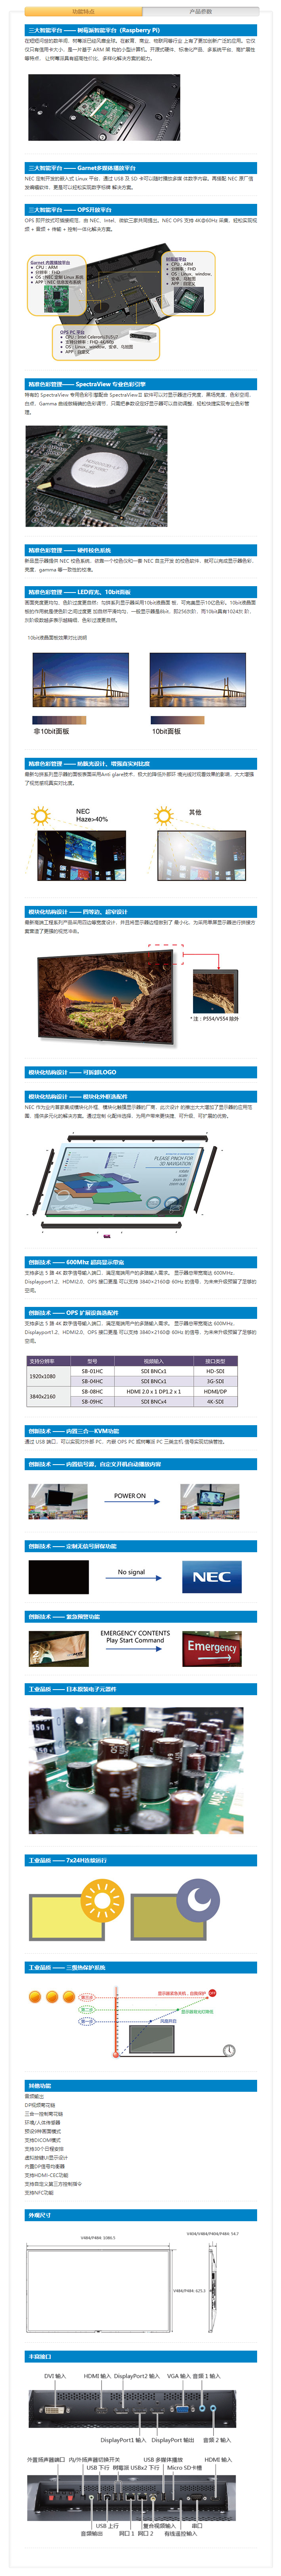 NEC显示器_产品_V484